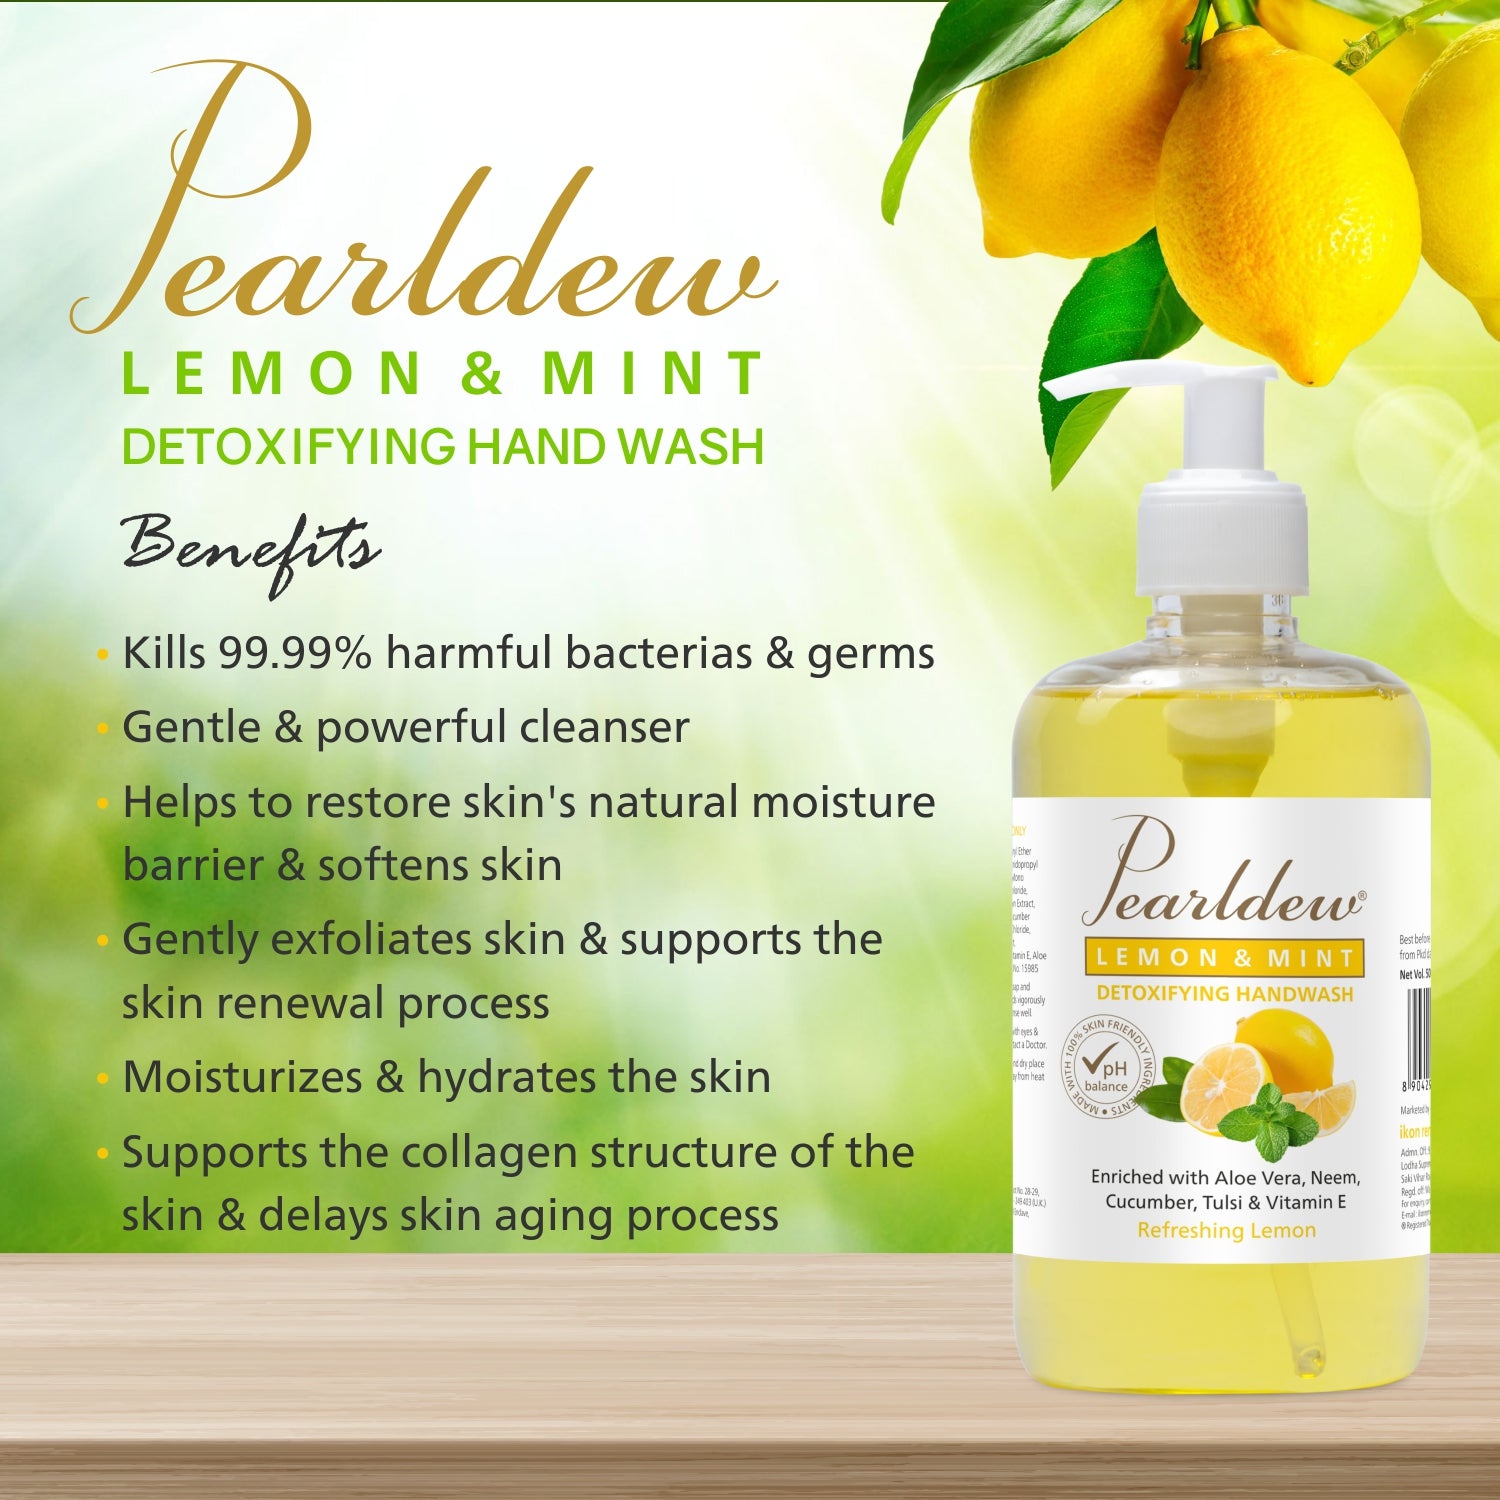 Pearldew Lemon & Mint Detoxifying Hand Wash (500 ml)